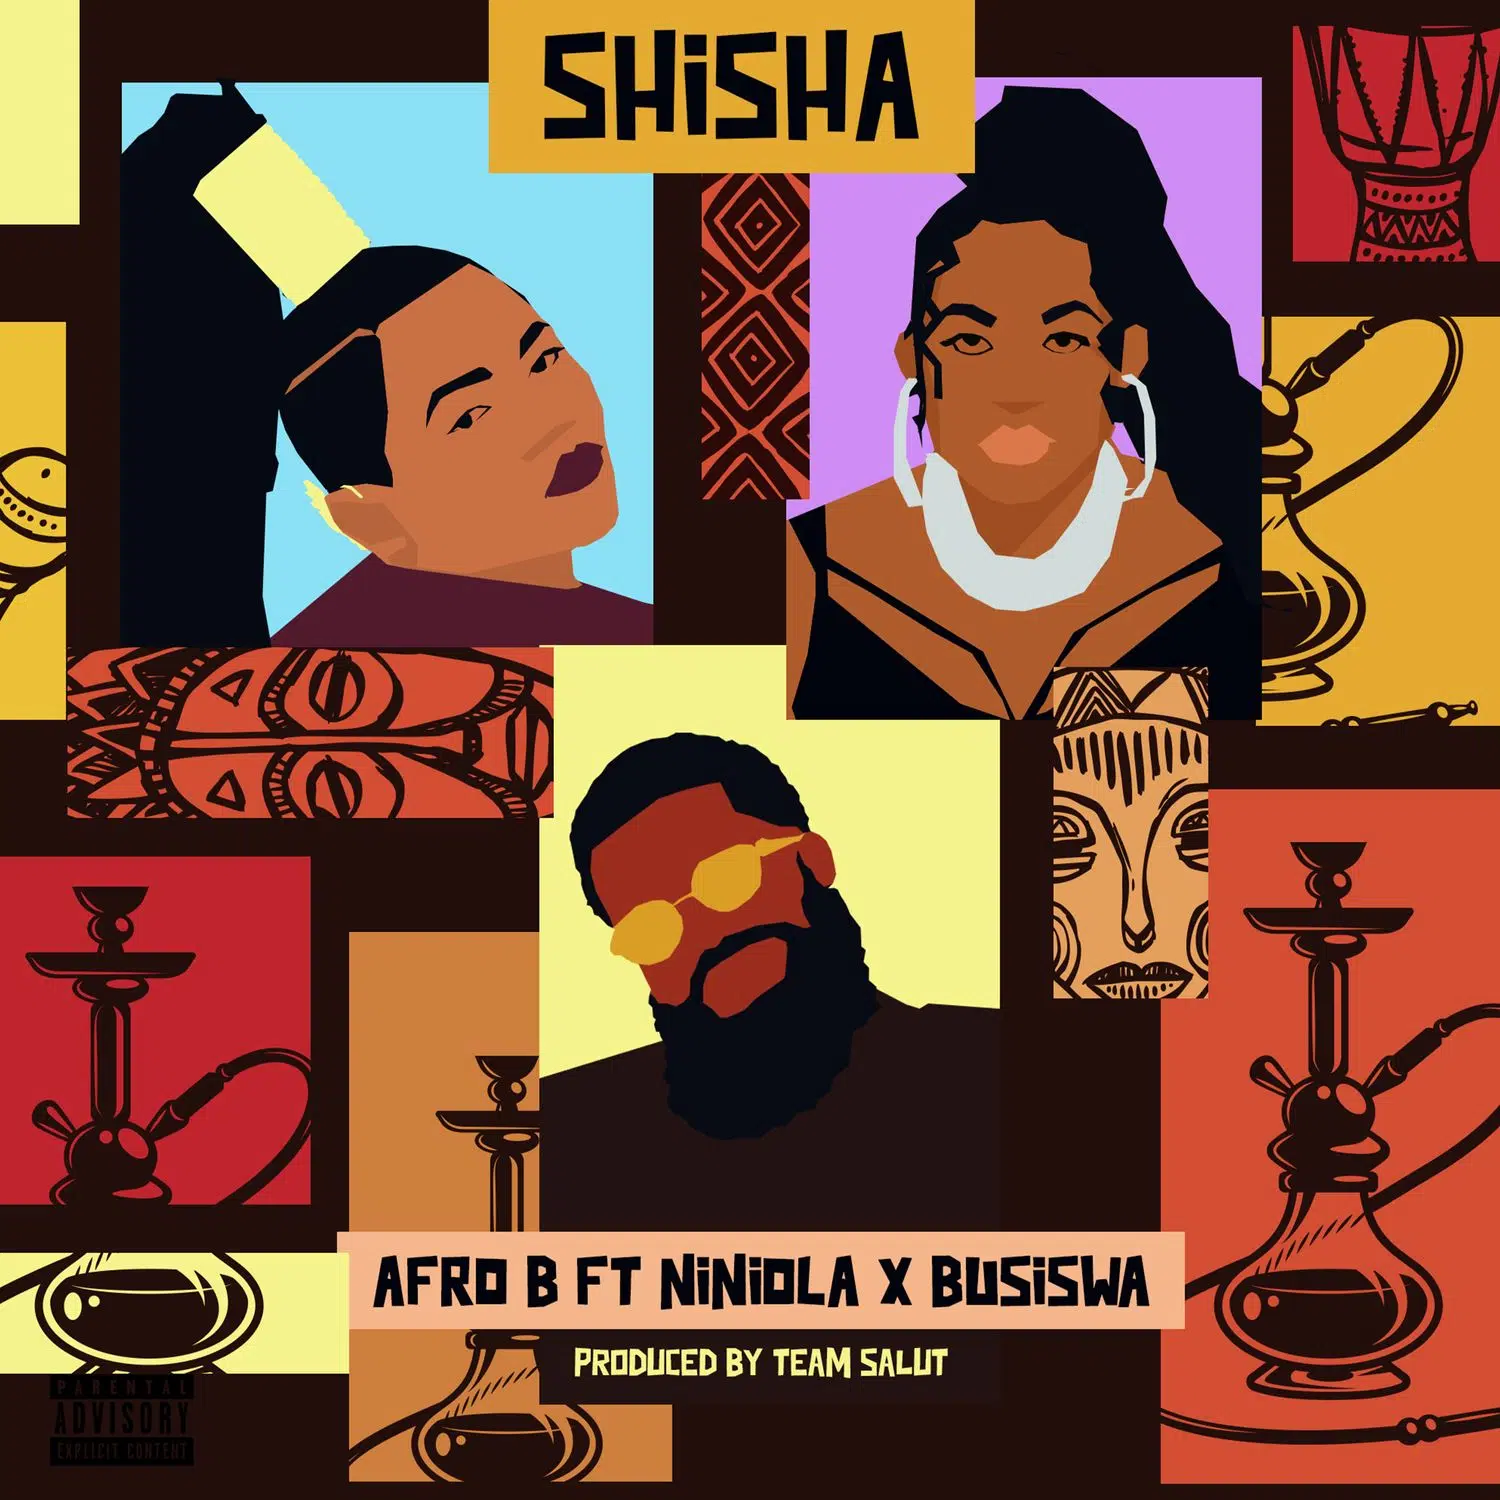 DOWNLOAD: Afro B Ft. Niniola & Busiswa – “Shisha” Video + Audio Mp3